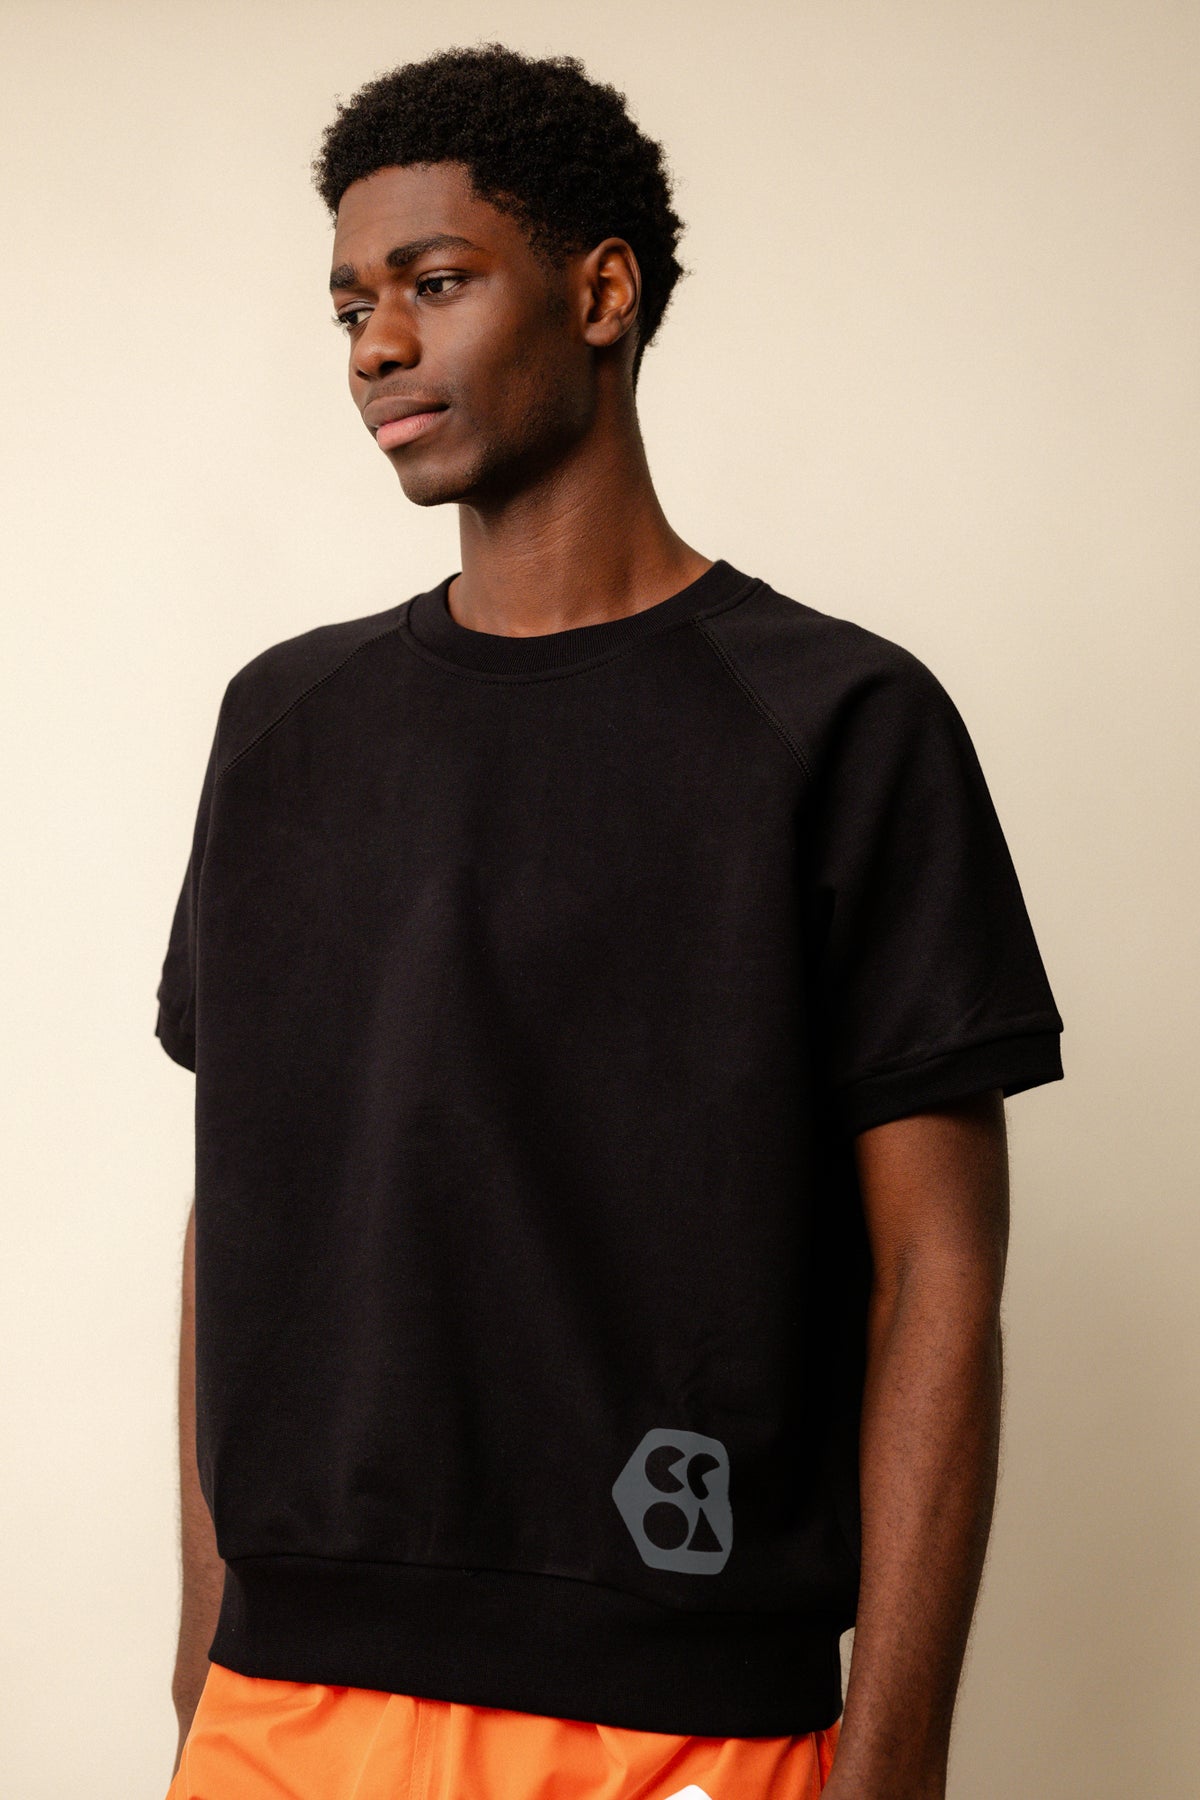 
            Black male wearing short sleeve raglan training top plastic free in black with CCOA logo